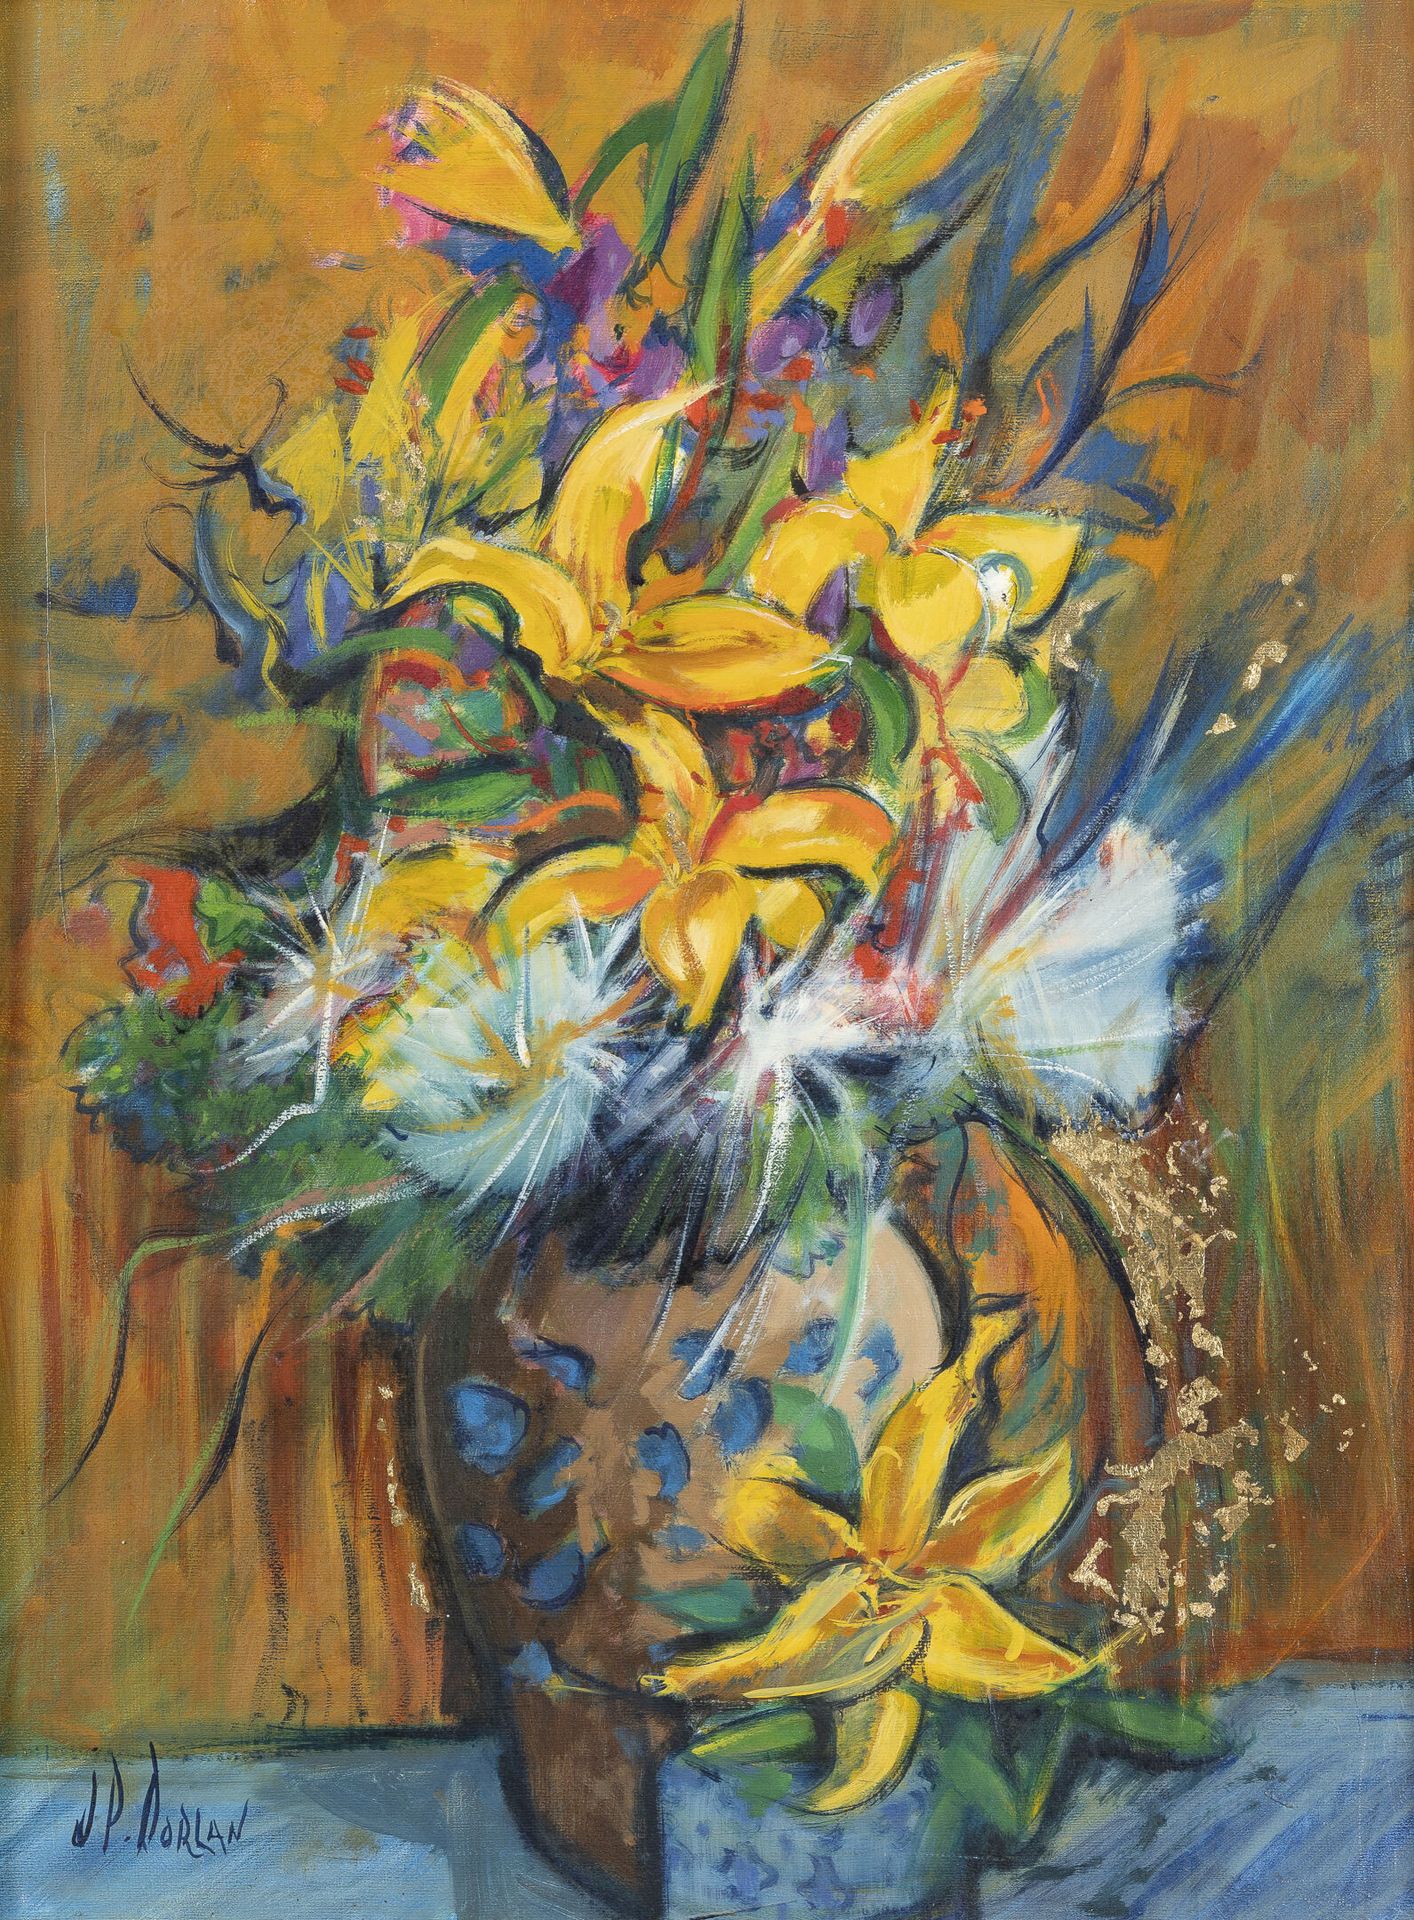 Jean Pierre DORLAN (1951) 一束花。

布面油画。

左下方有签名。

61 x 46厘米。